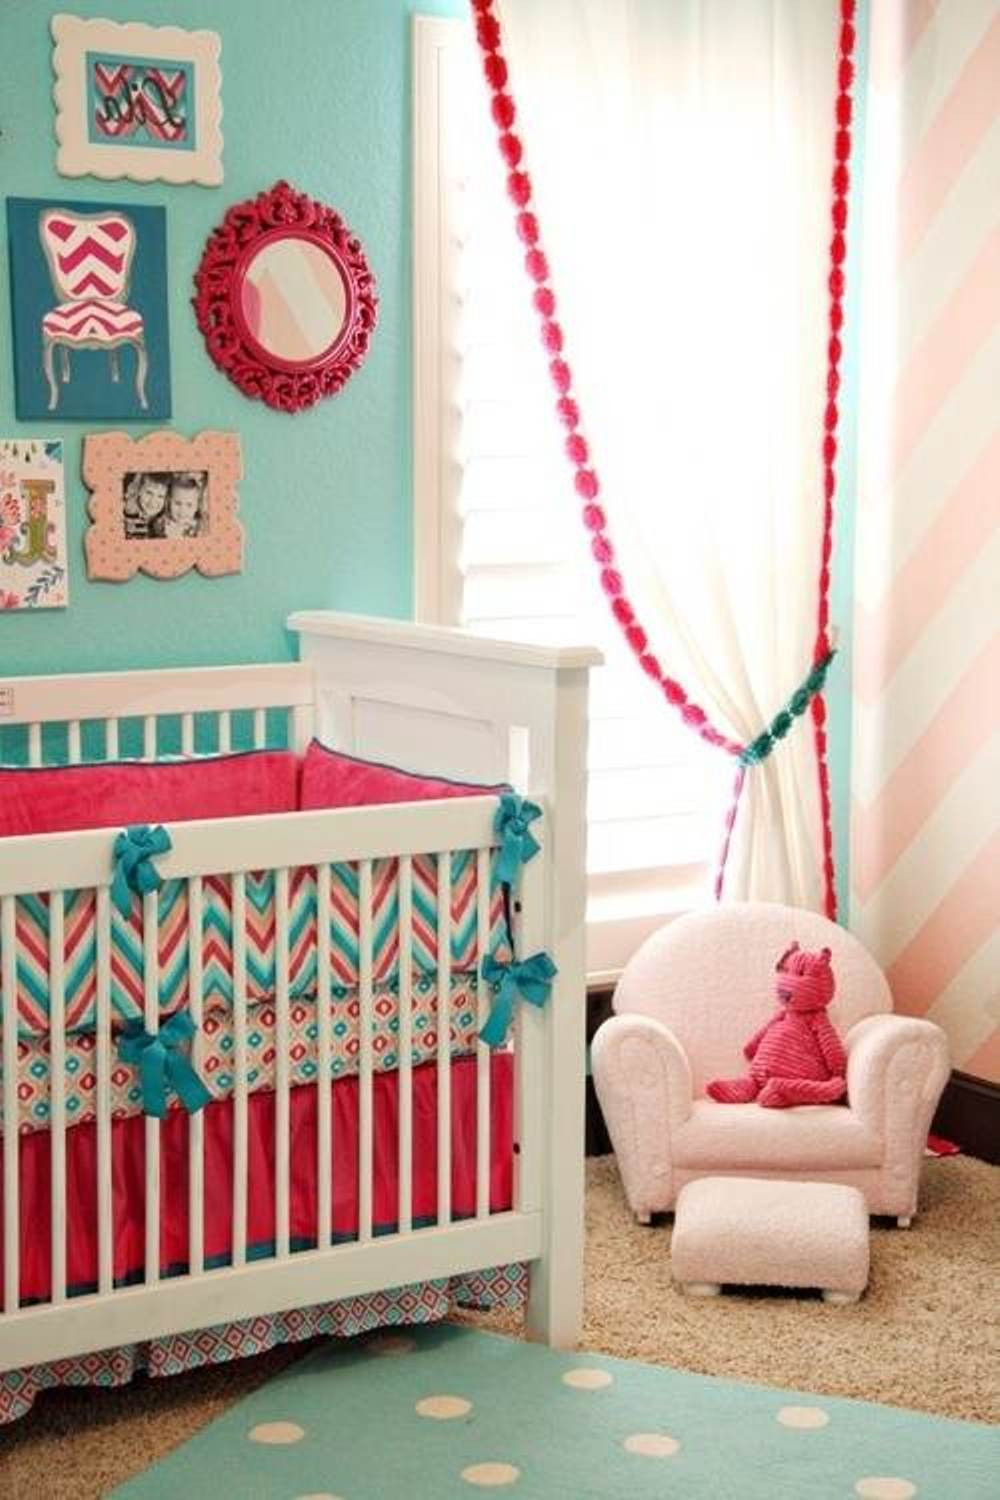 Baby Girl Bedroom Decoration
 25 Baby Bedroom Design Ideas For Your Cutie Pie